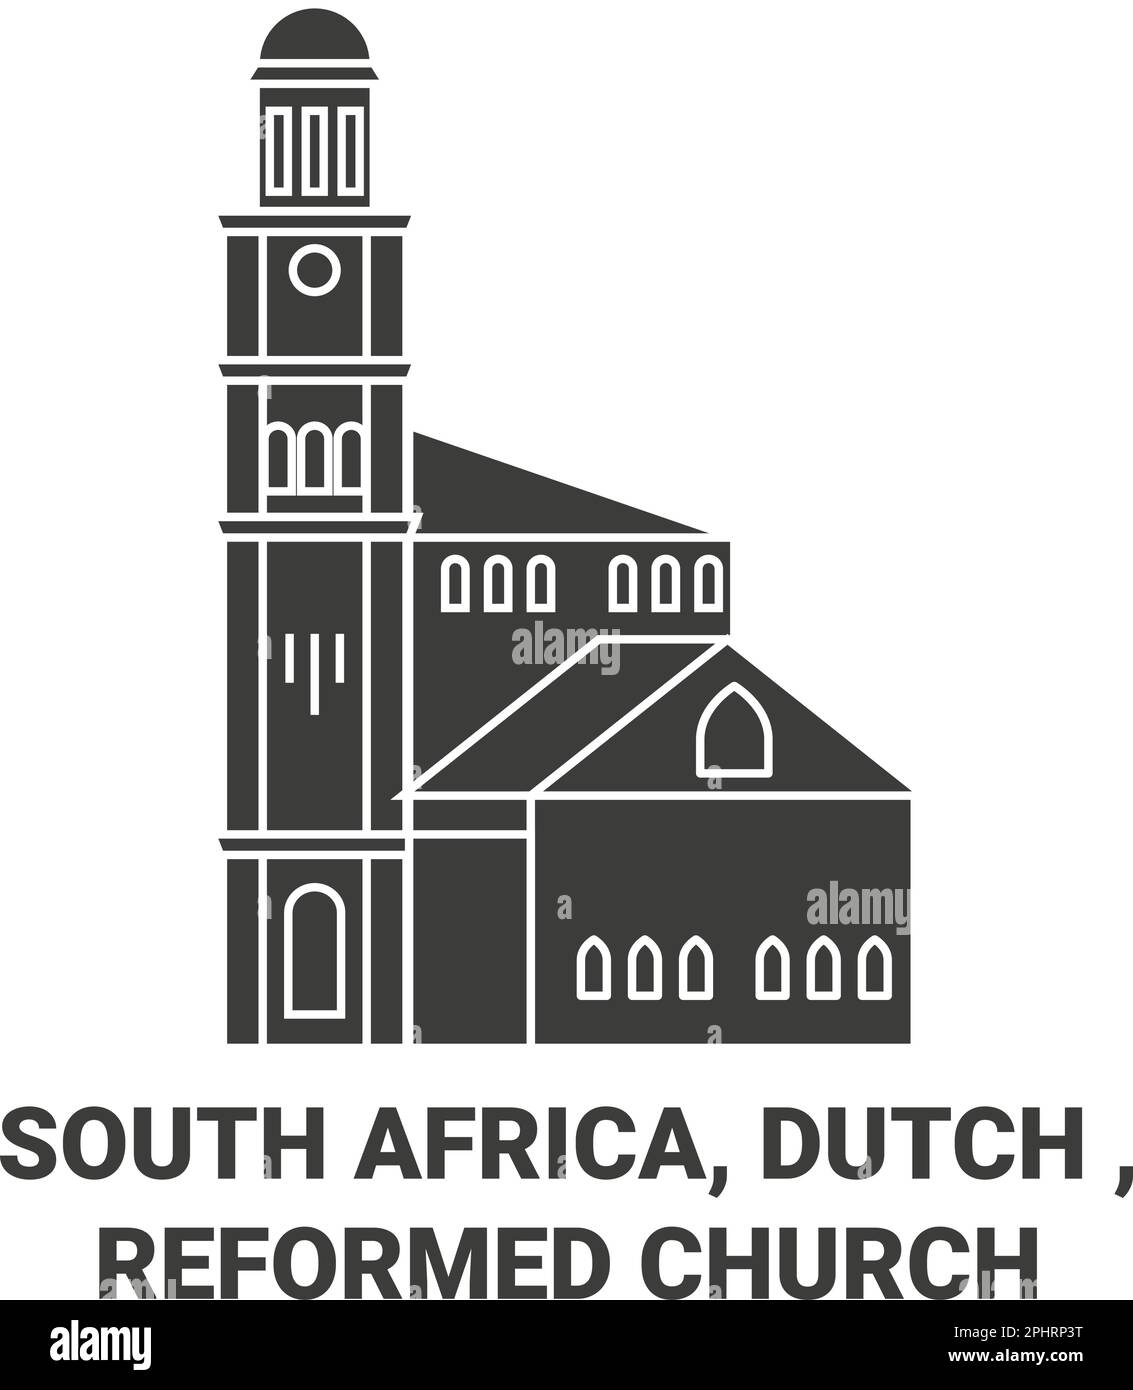 South Africa, Dutch , Reformed Church travel landmark vector illustration Stock Vector